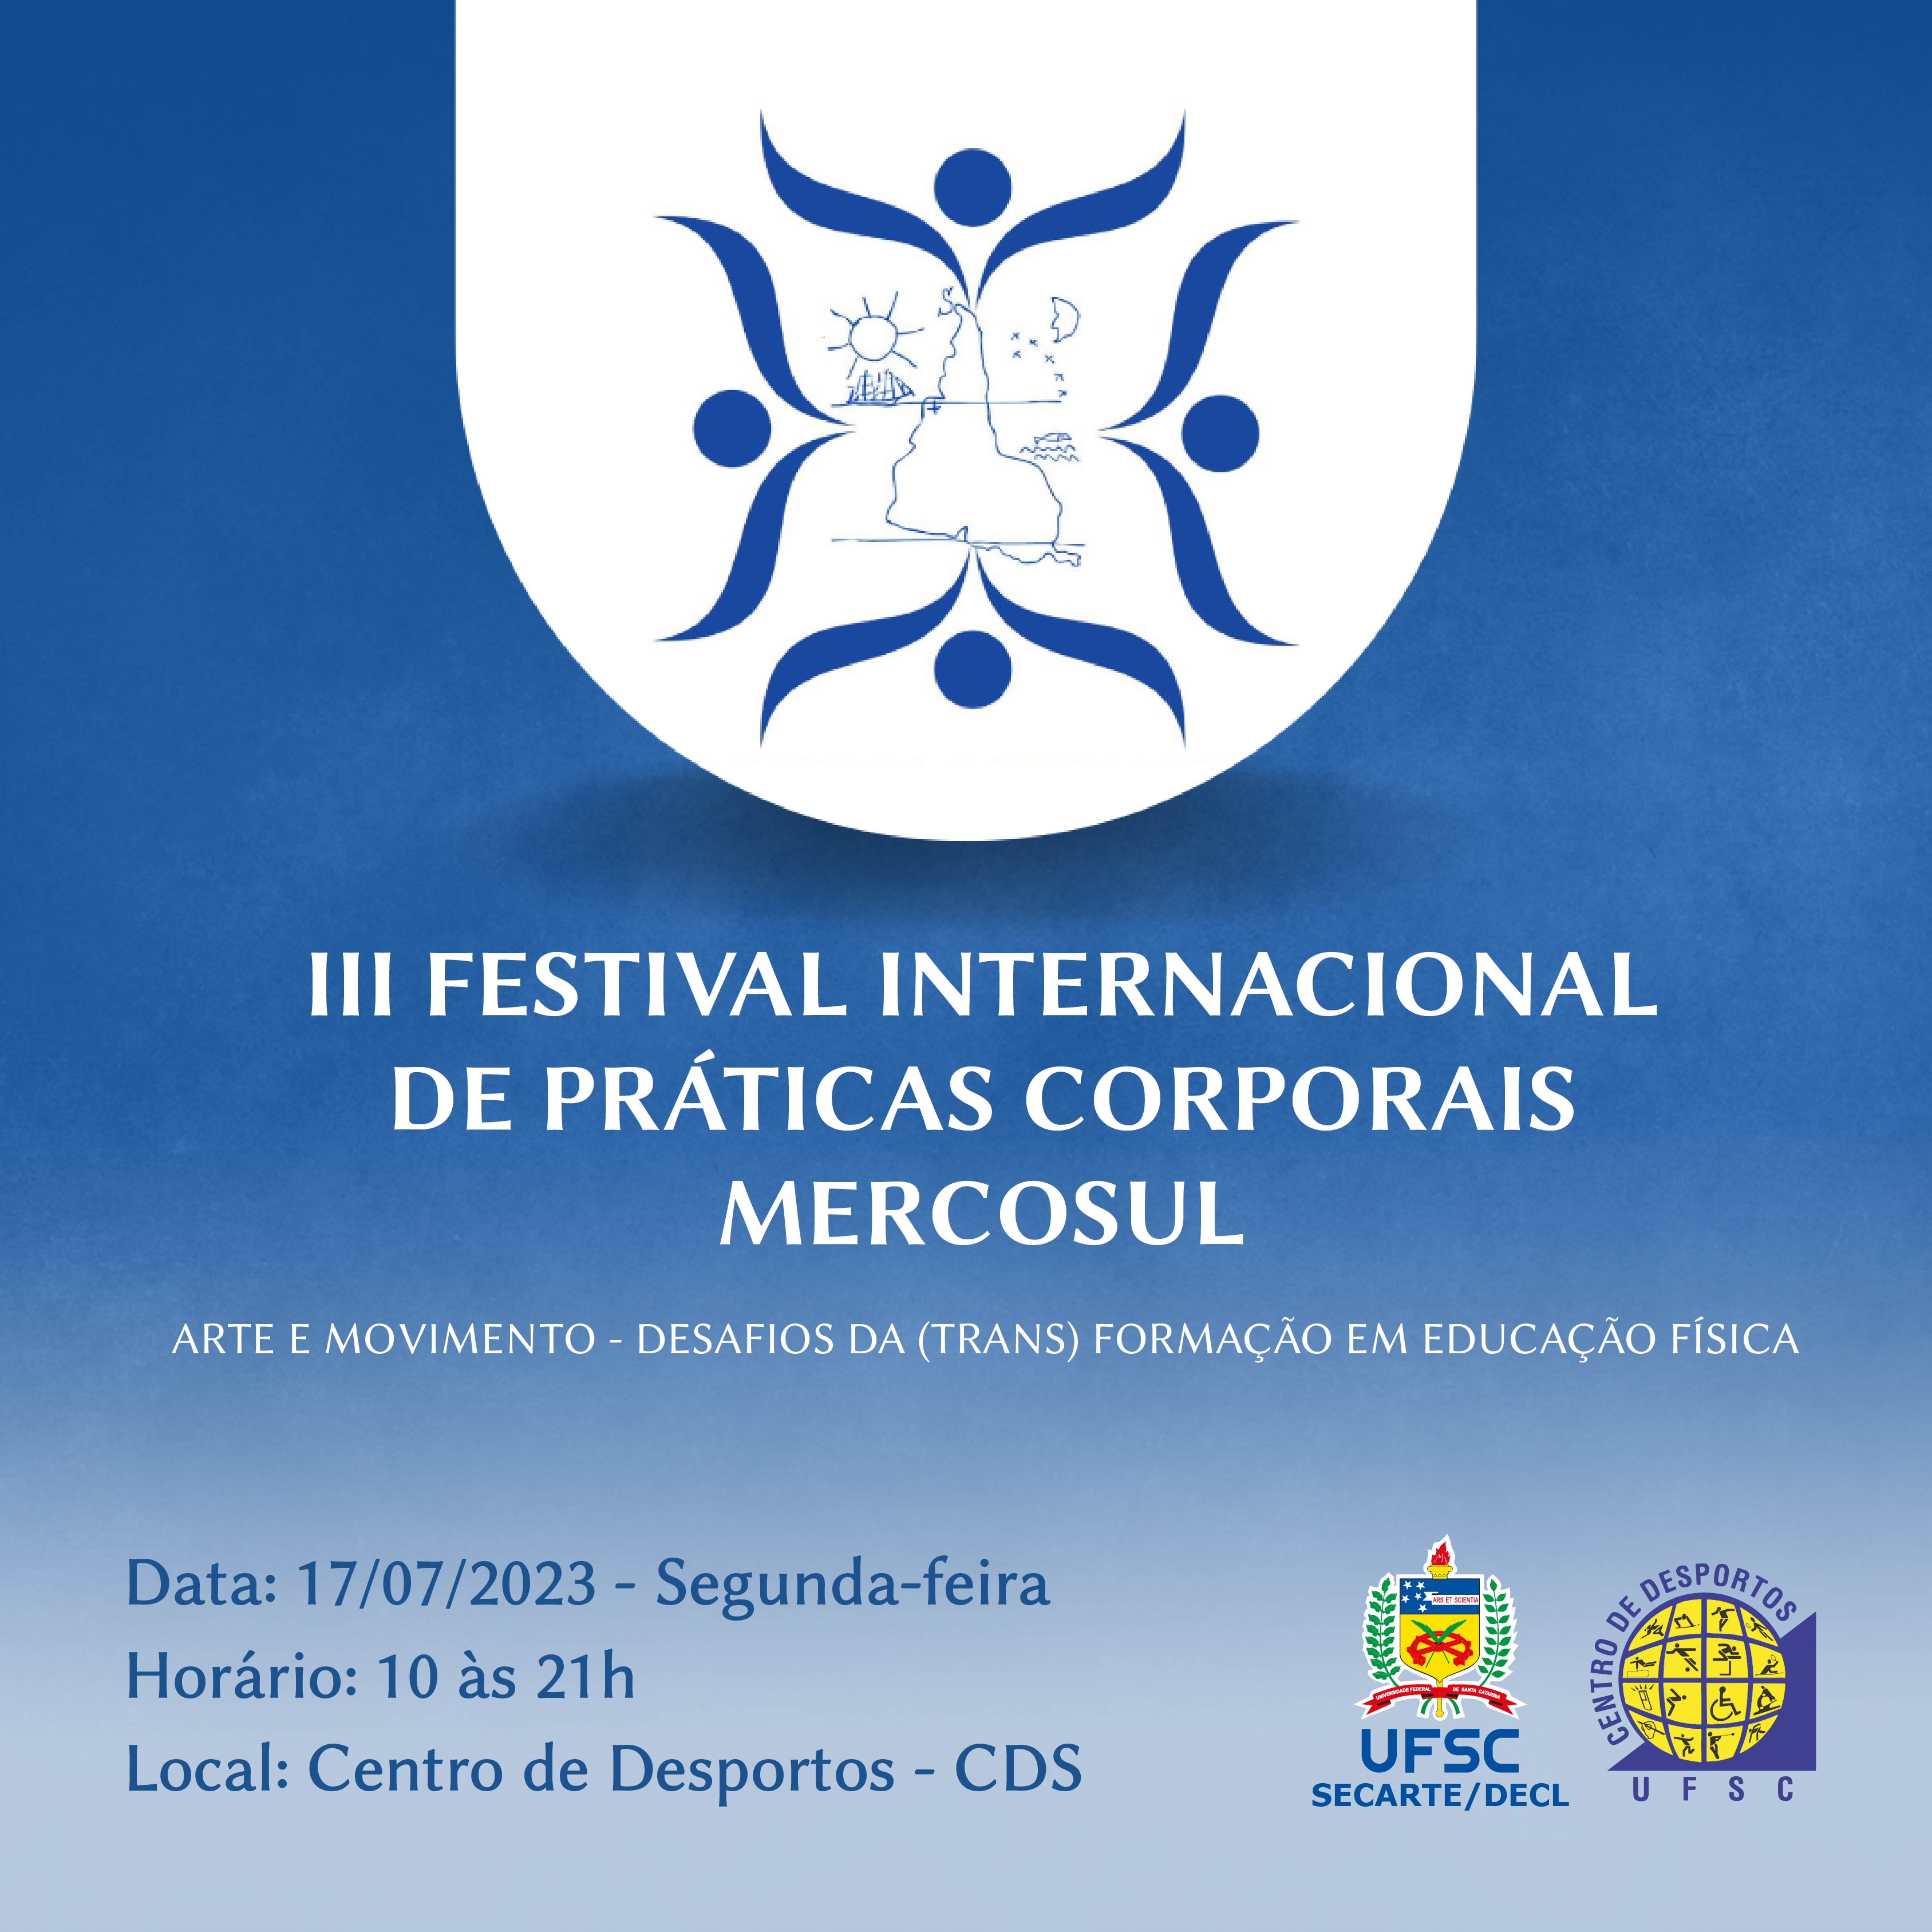 III Festival Internacional de Práticas Corporais do Mercosul @ Centro de Desportos - CDS